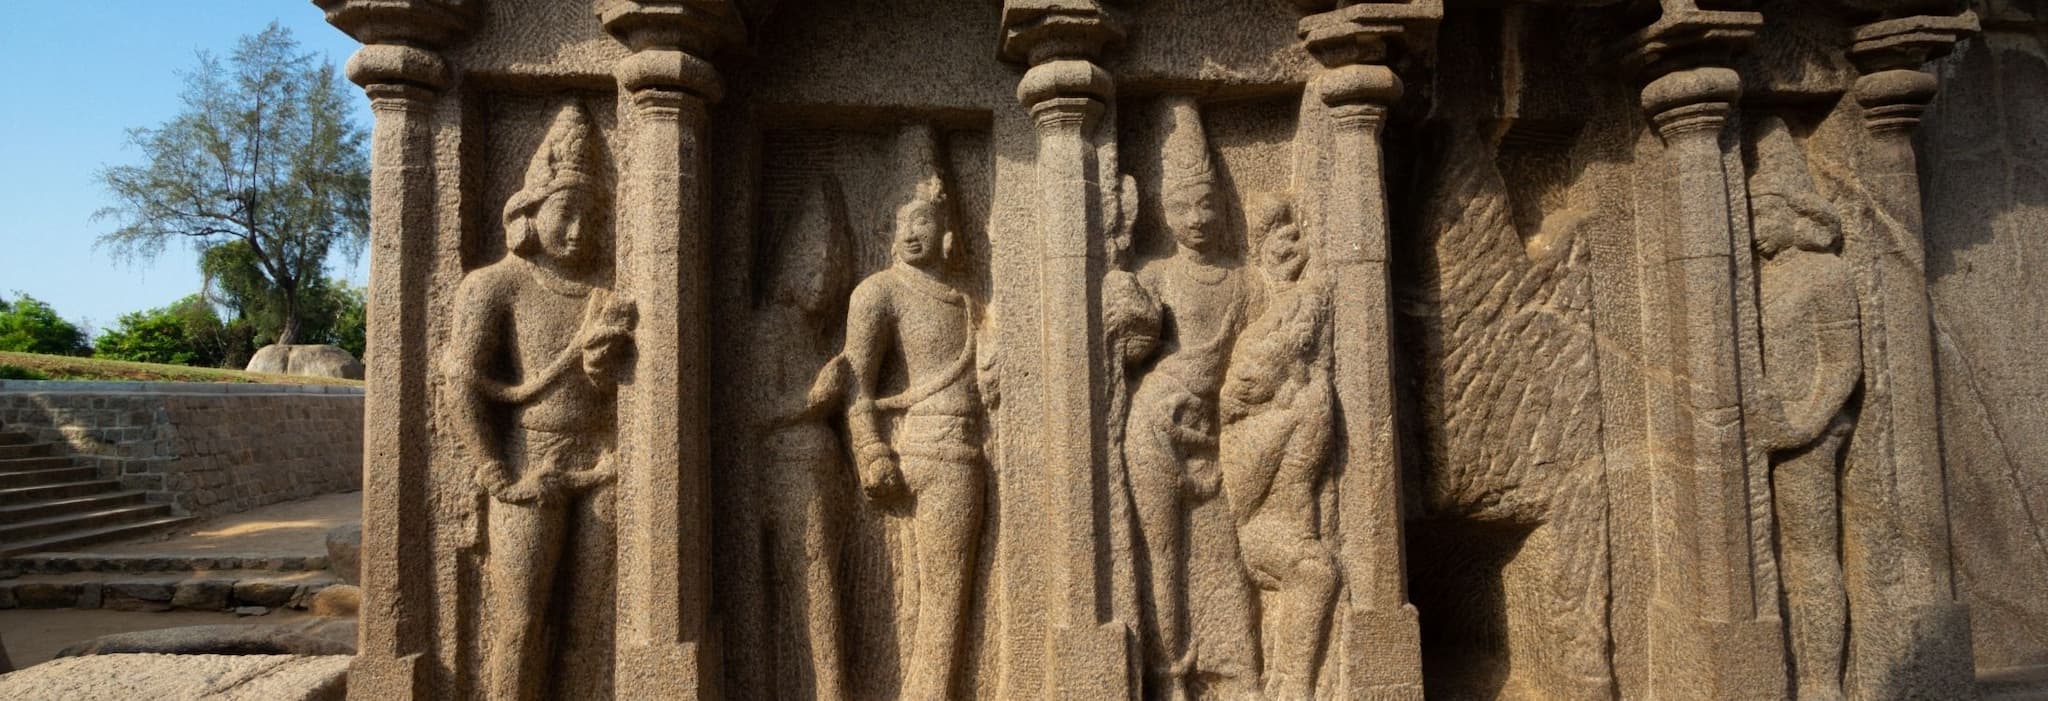 Arjuna Ratha in the Pancha Rathas